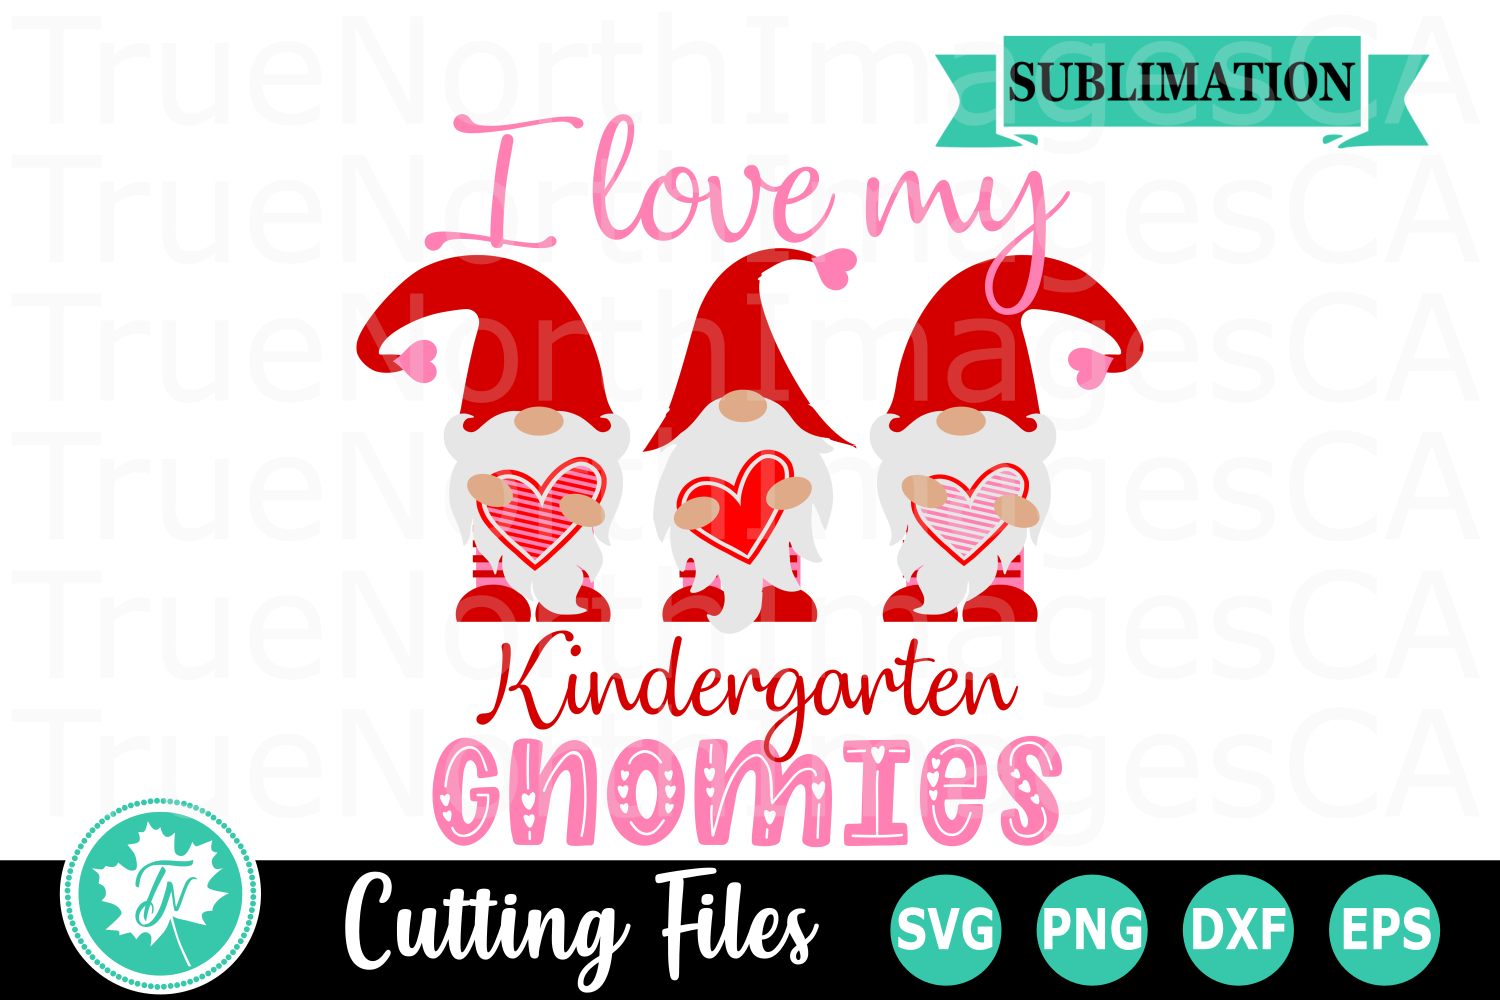 Download I Love my Kindergarten Gnomies - A Valentine's SVG Cut File